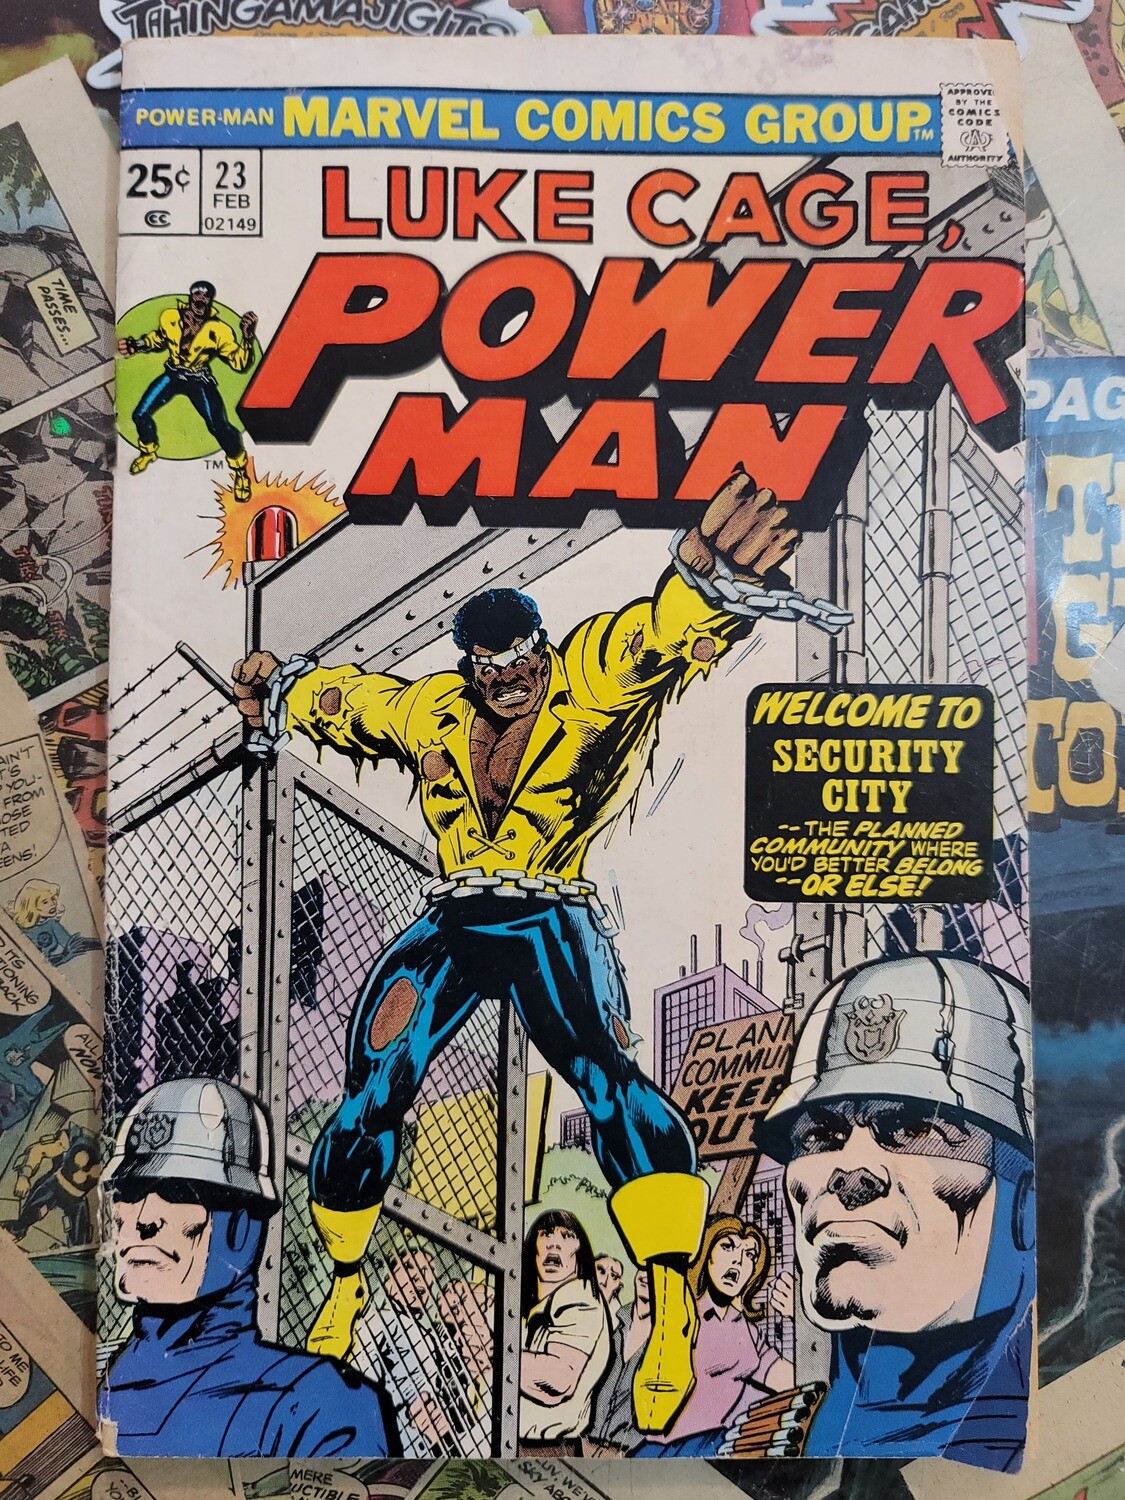 Power Man #23 4.5